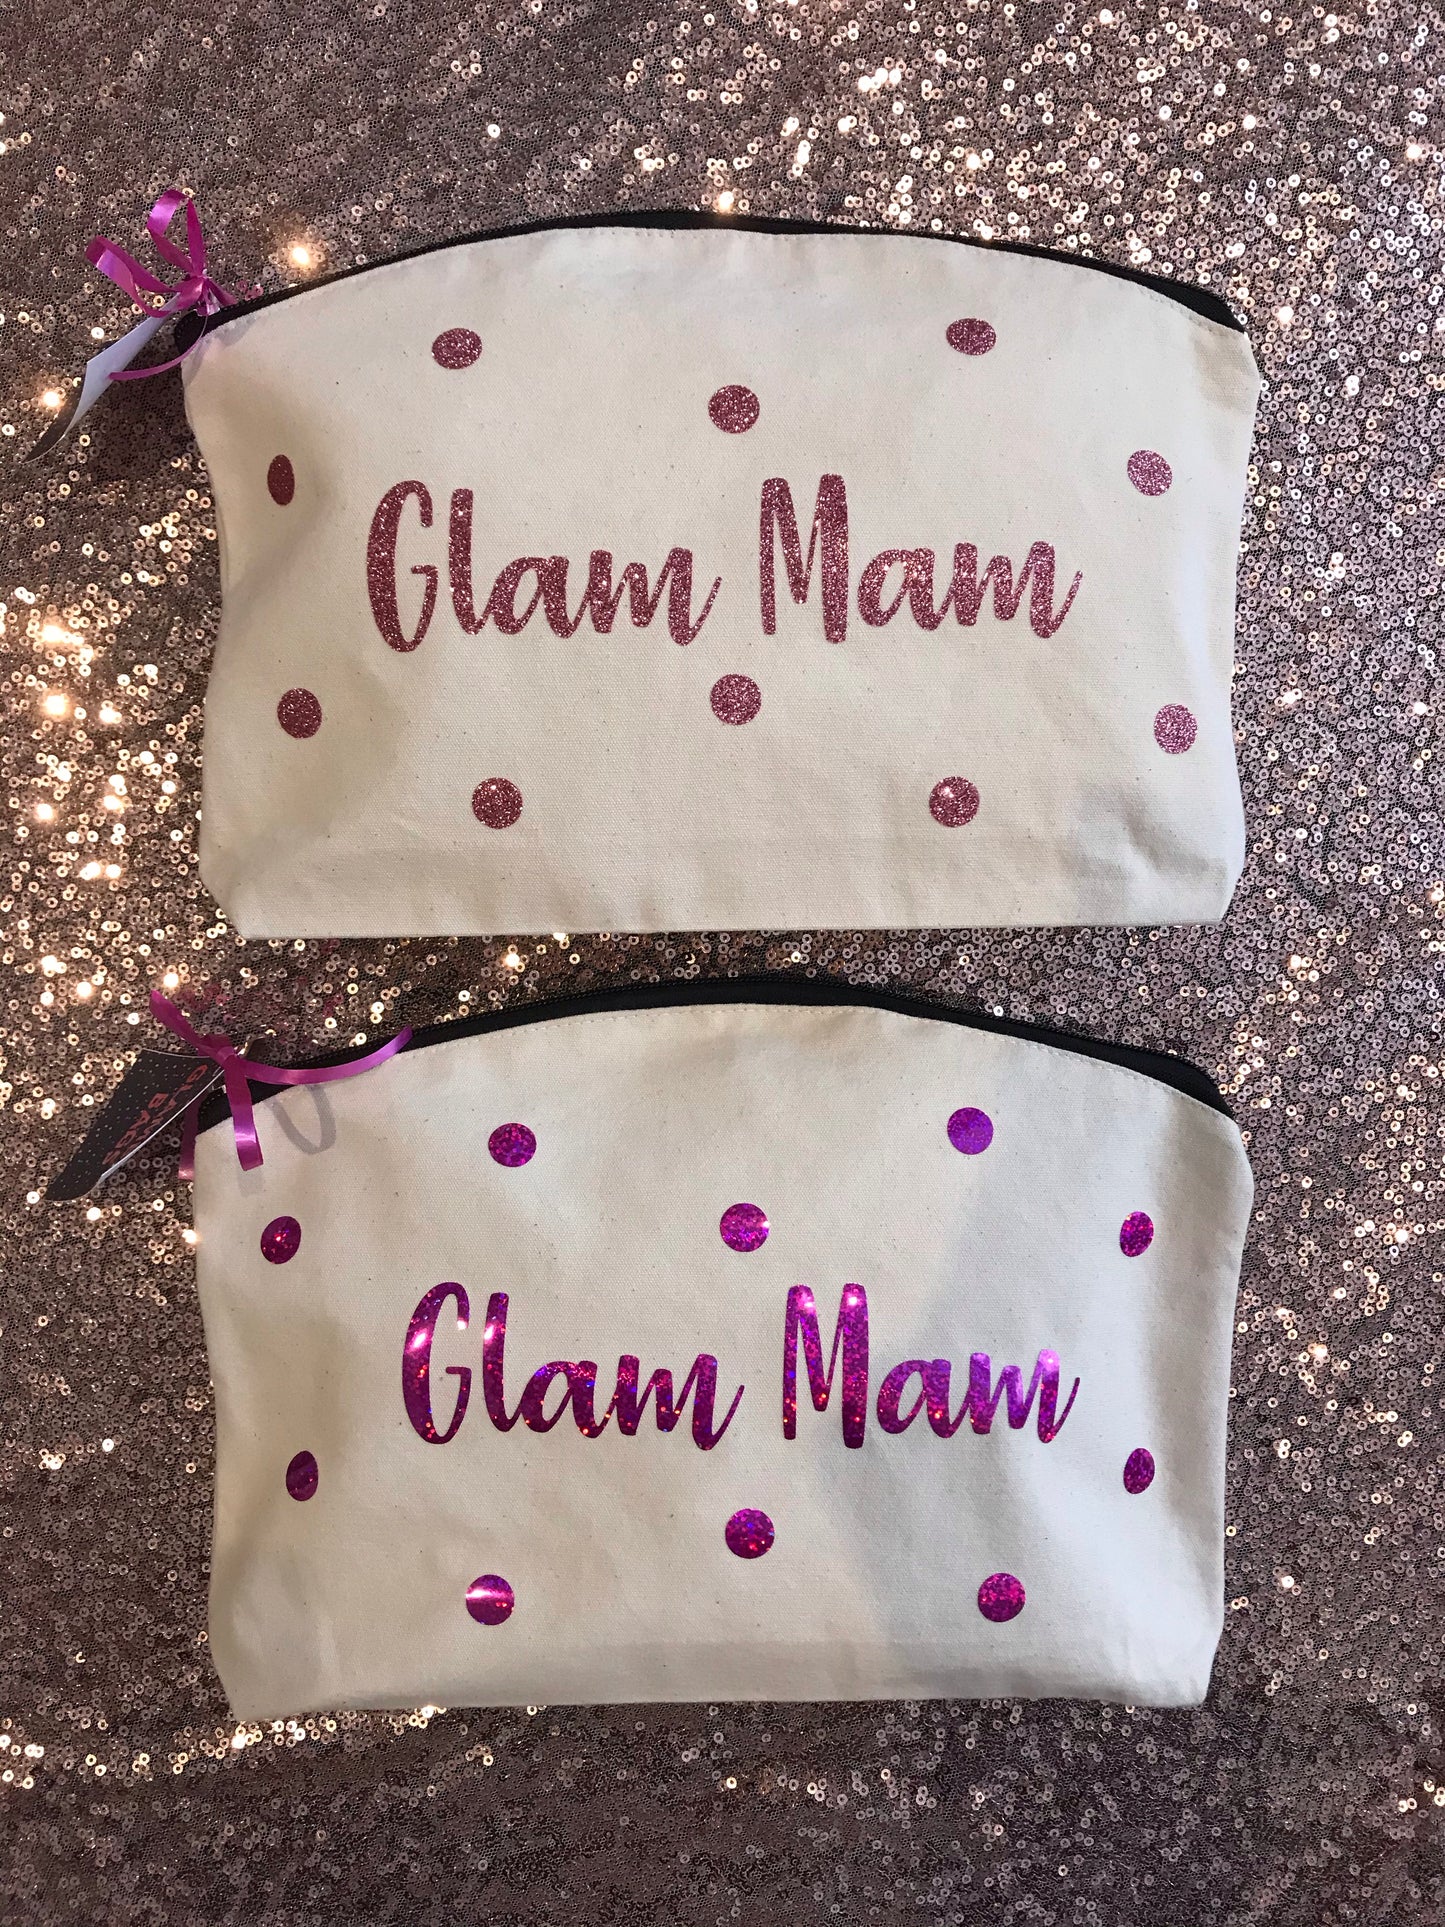 Glam Mam - Glamble Bags